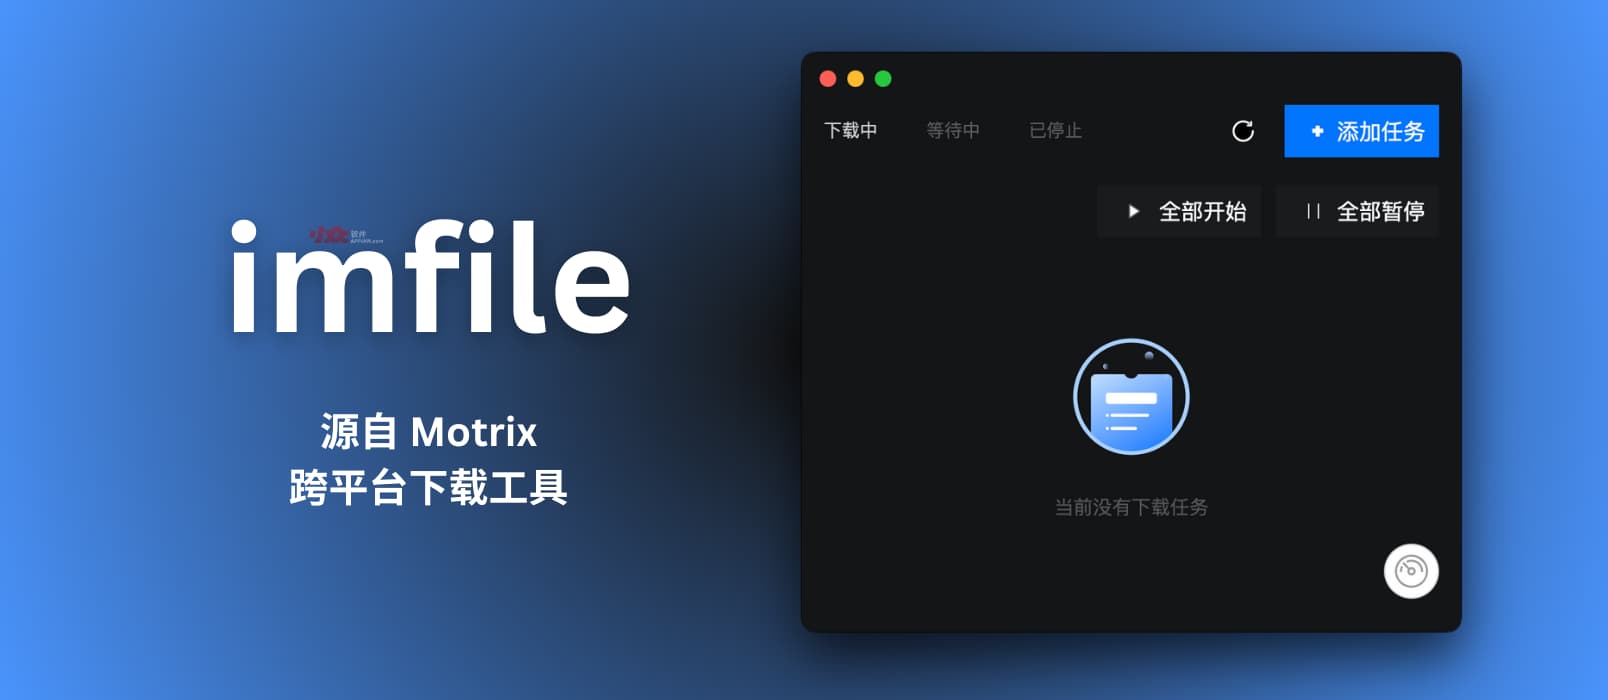 imfile - 源自 Motrix，跨平台下载工具，支持 HTTP、BT、磁力 12